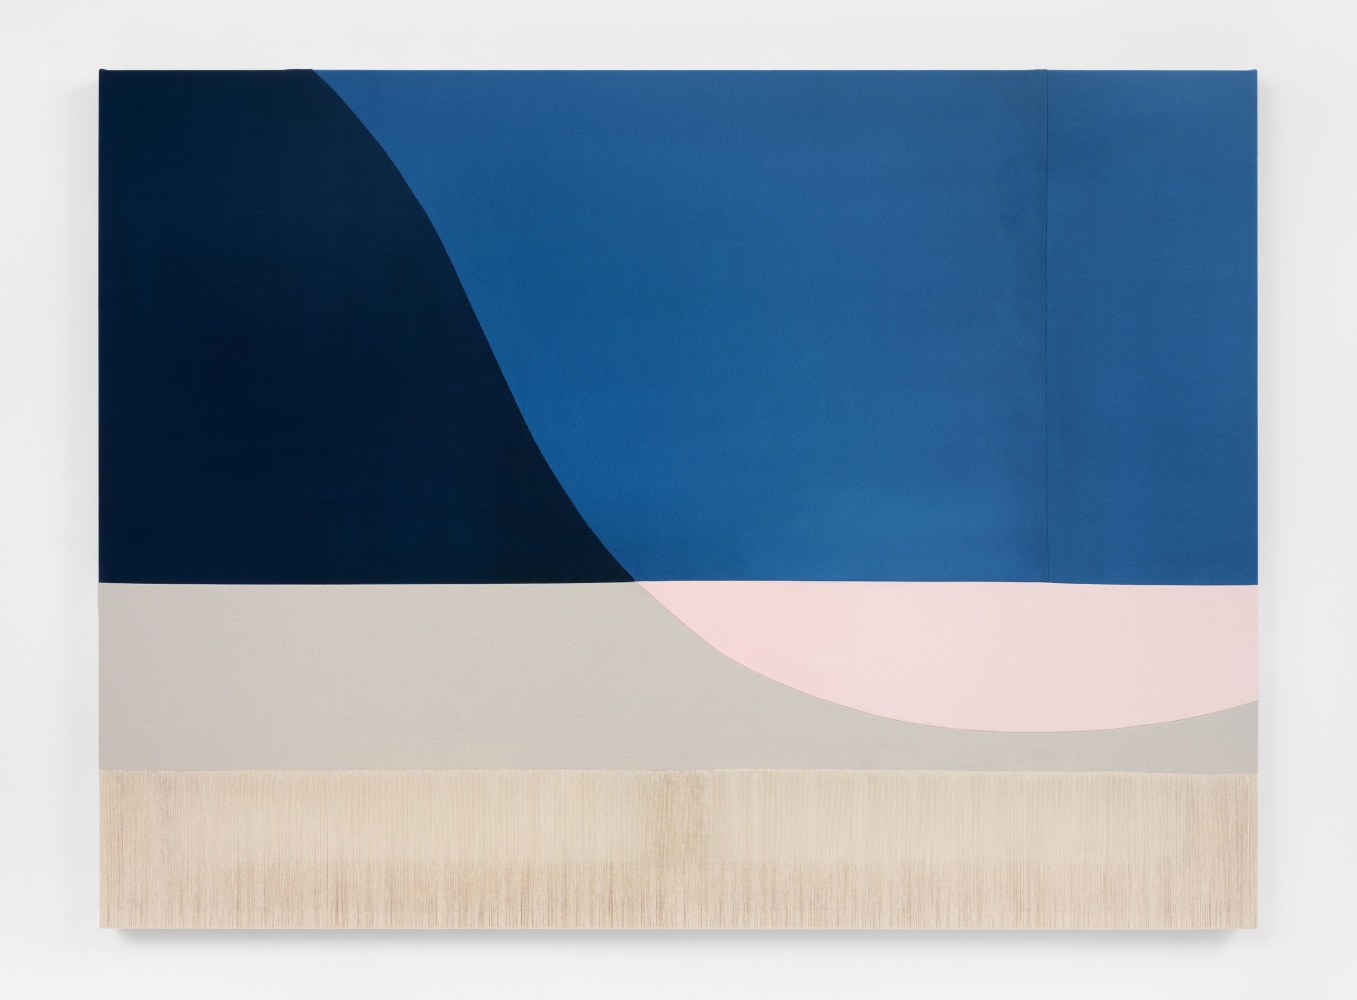 Rebecca Ward&amp;nbsp;
blue tulip, 2022&amp;nbsp;
acrylic and dye on stitched canvas
45 x 60 inches (114.3 x 152.4 cm)
(RWA22-12)&amp;nbsp;